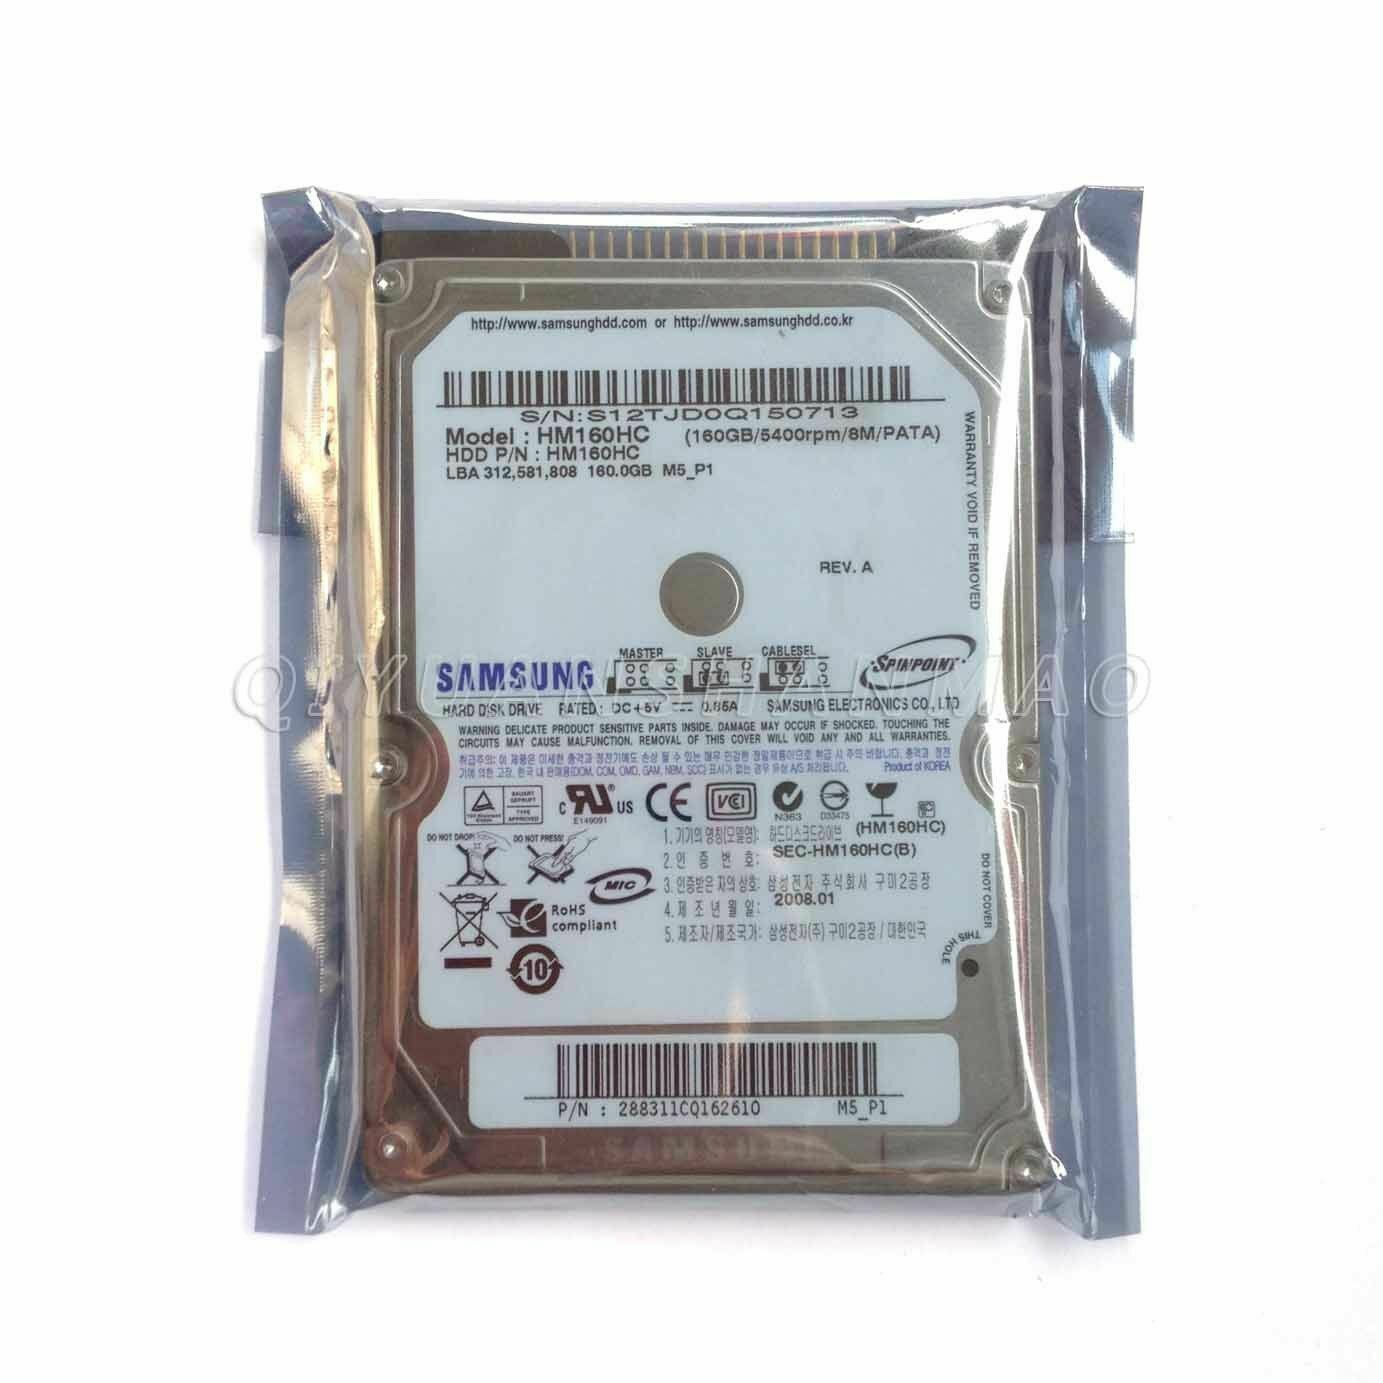 SAMSUNG 160GB HM160HC 5400RPM IDE PATA 2.5